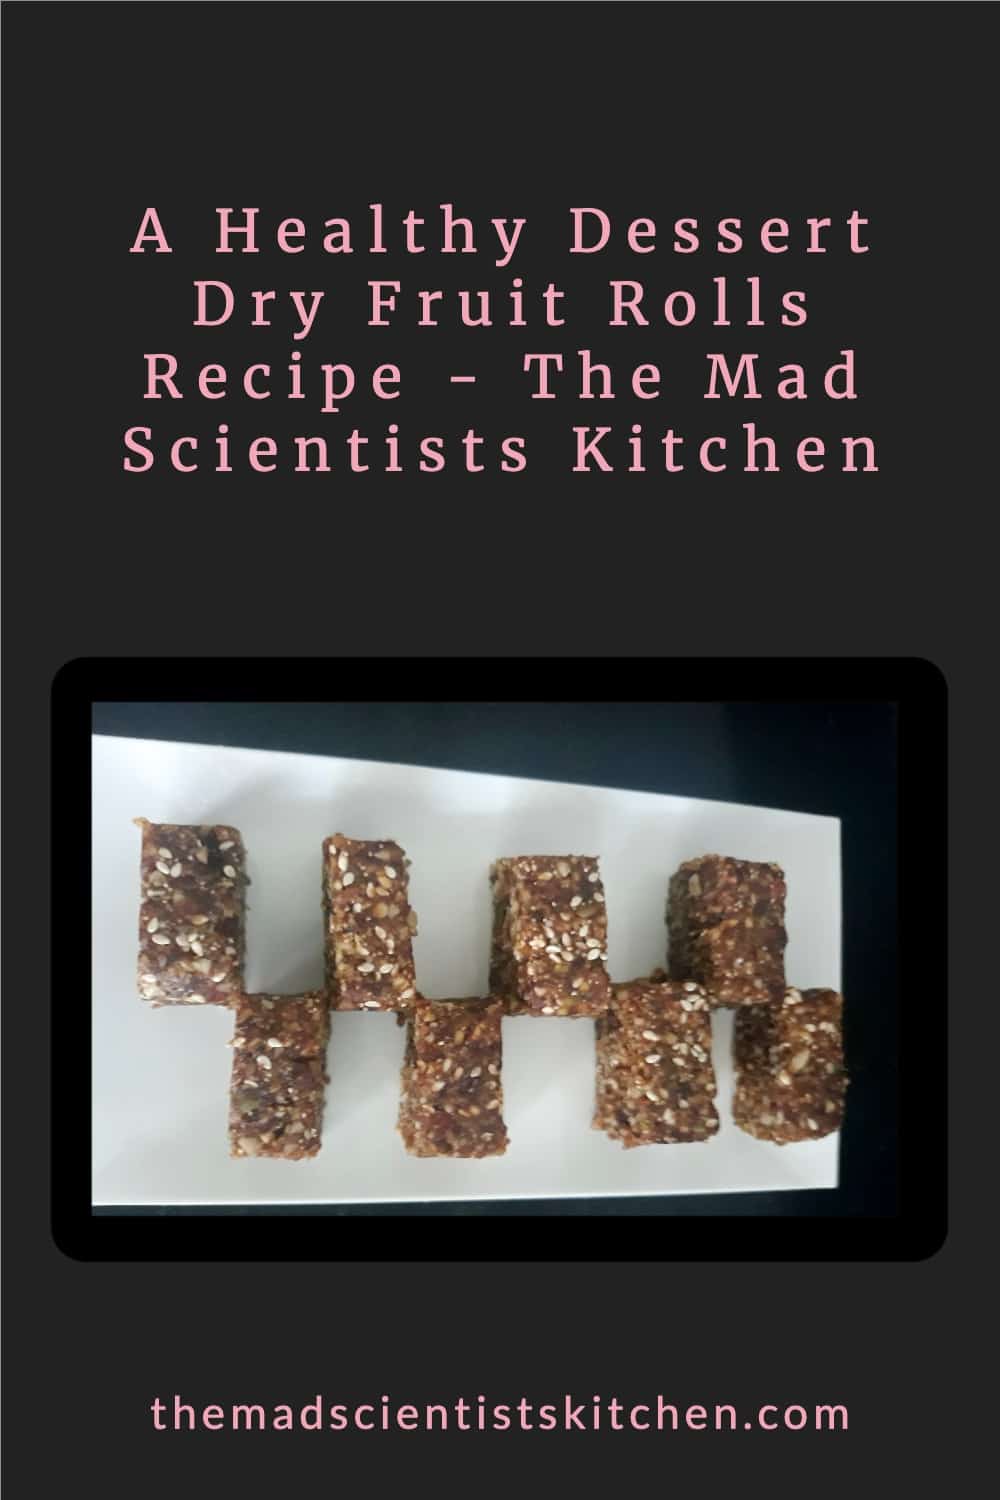 Easy Edible gift- Sugar-free Dry Fruit Rolls.